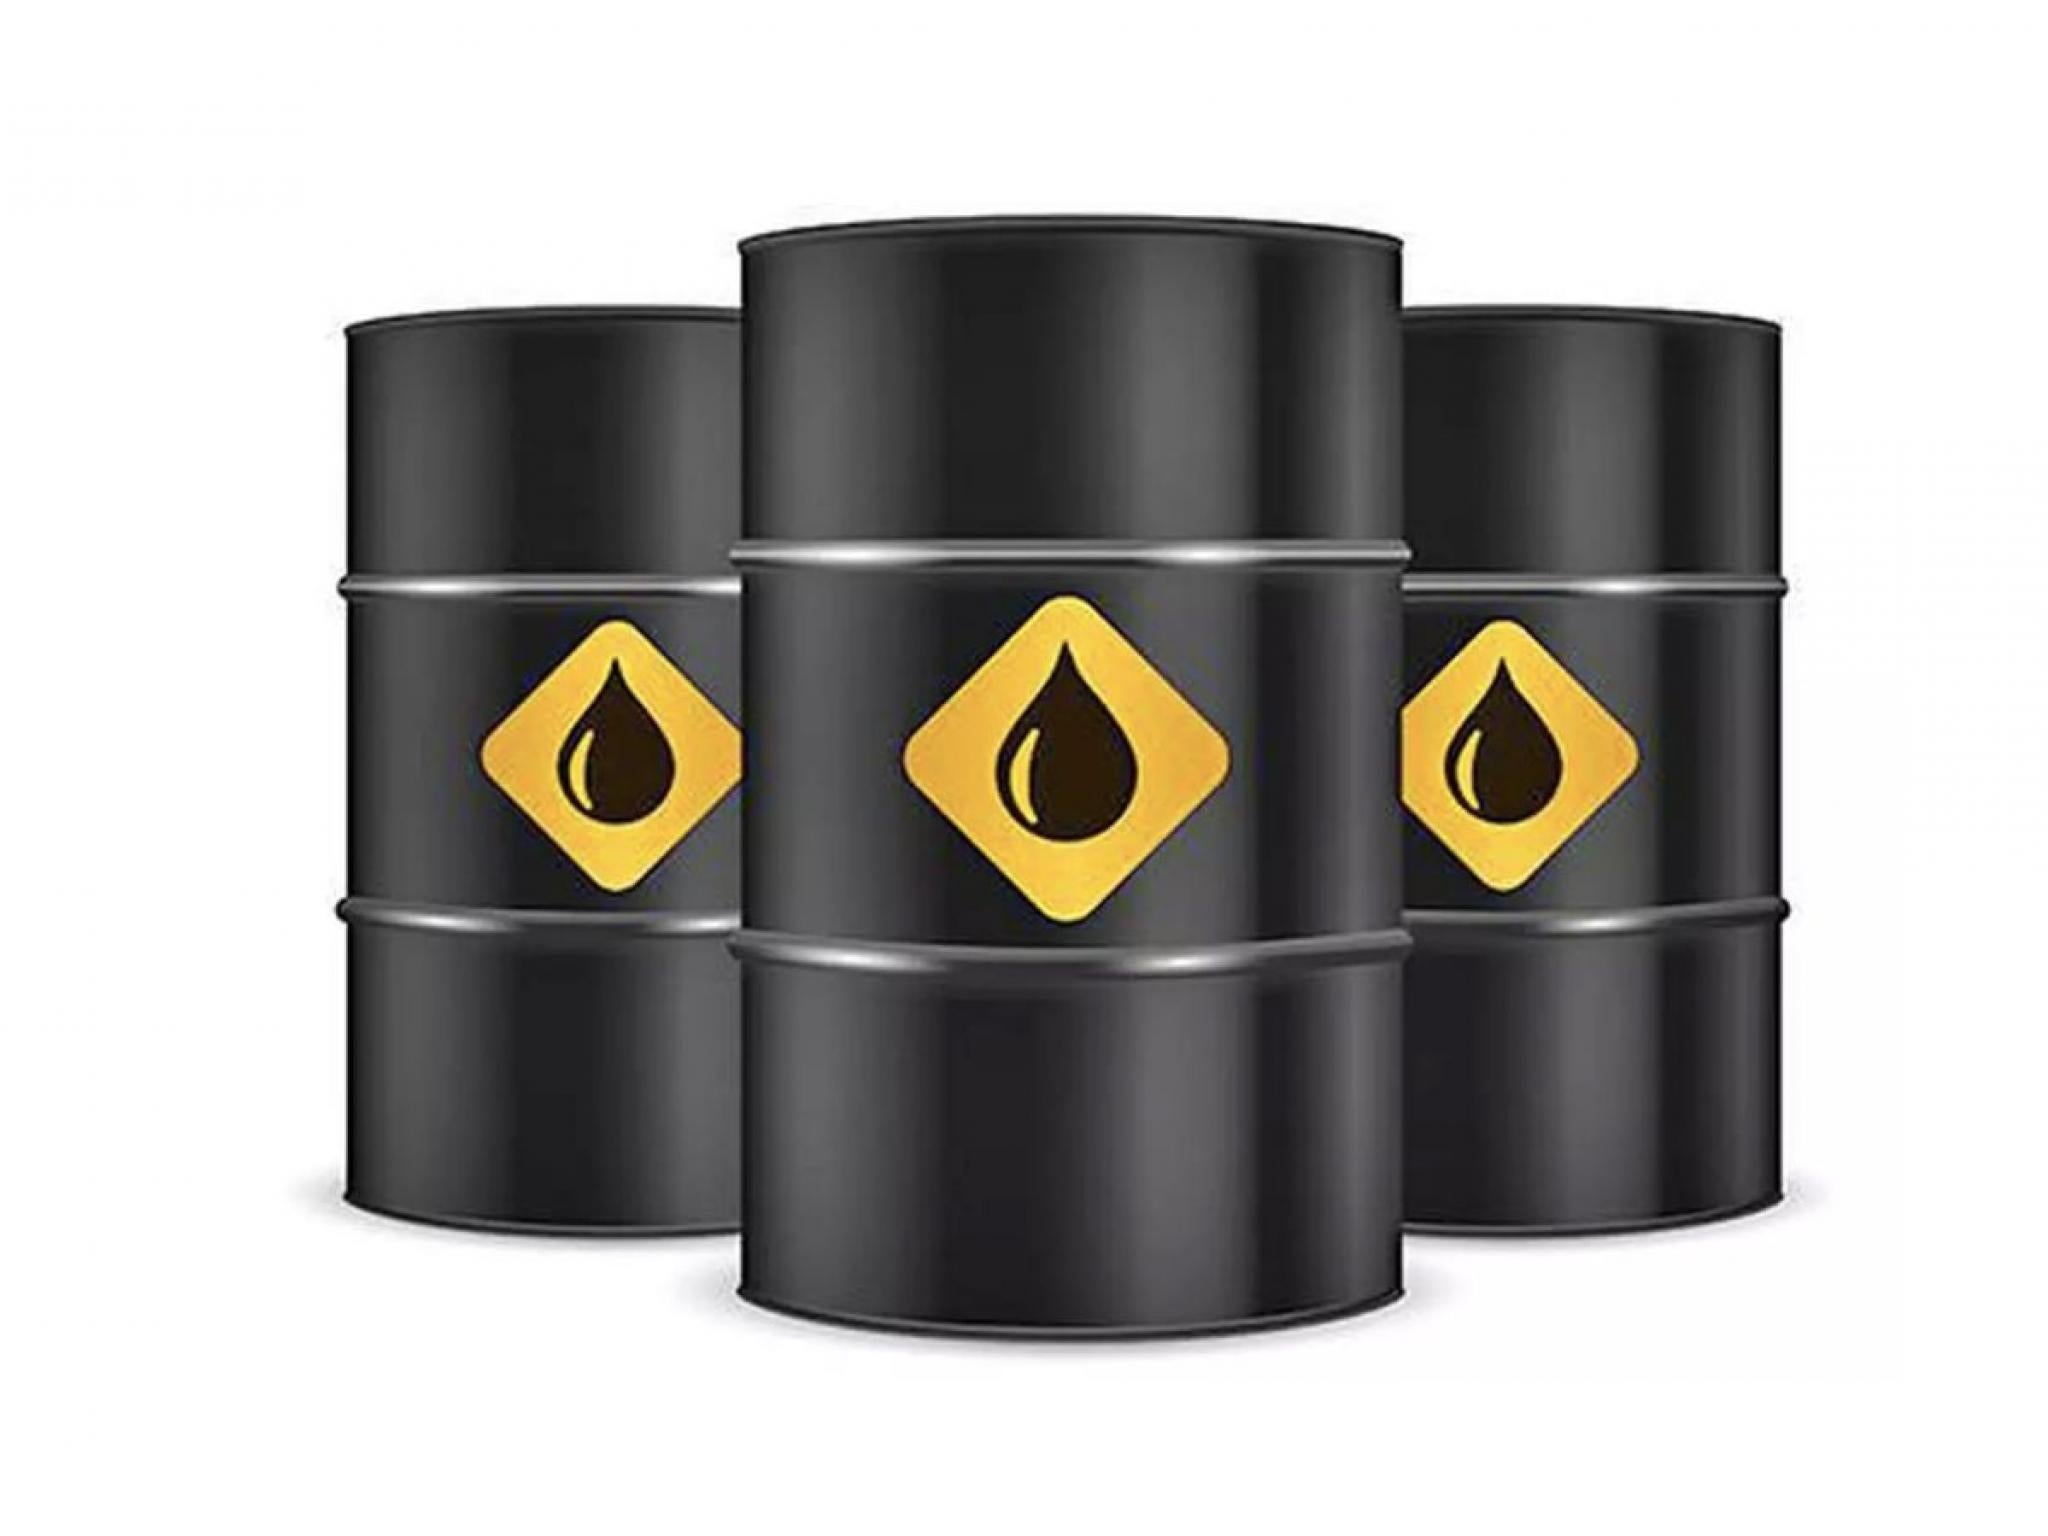  crude-oil-moves-lower-summit-therapeutics-shares-plummet 